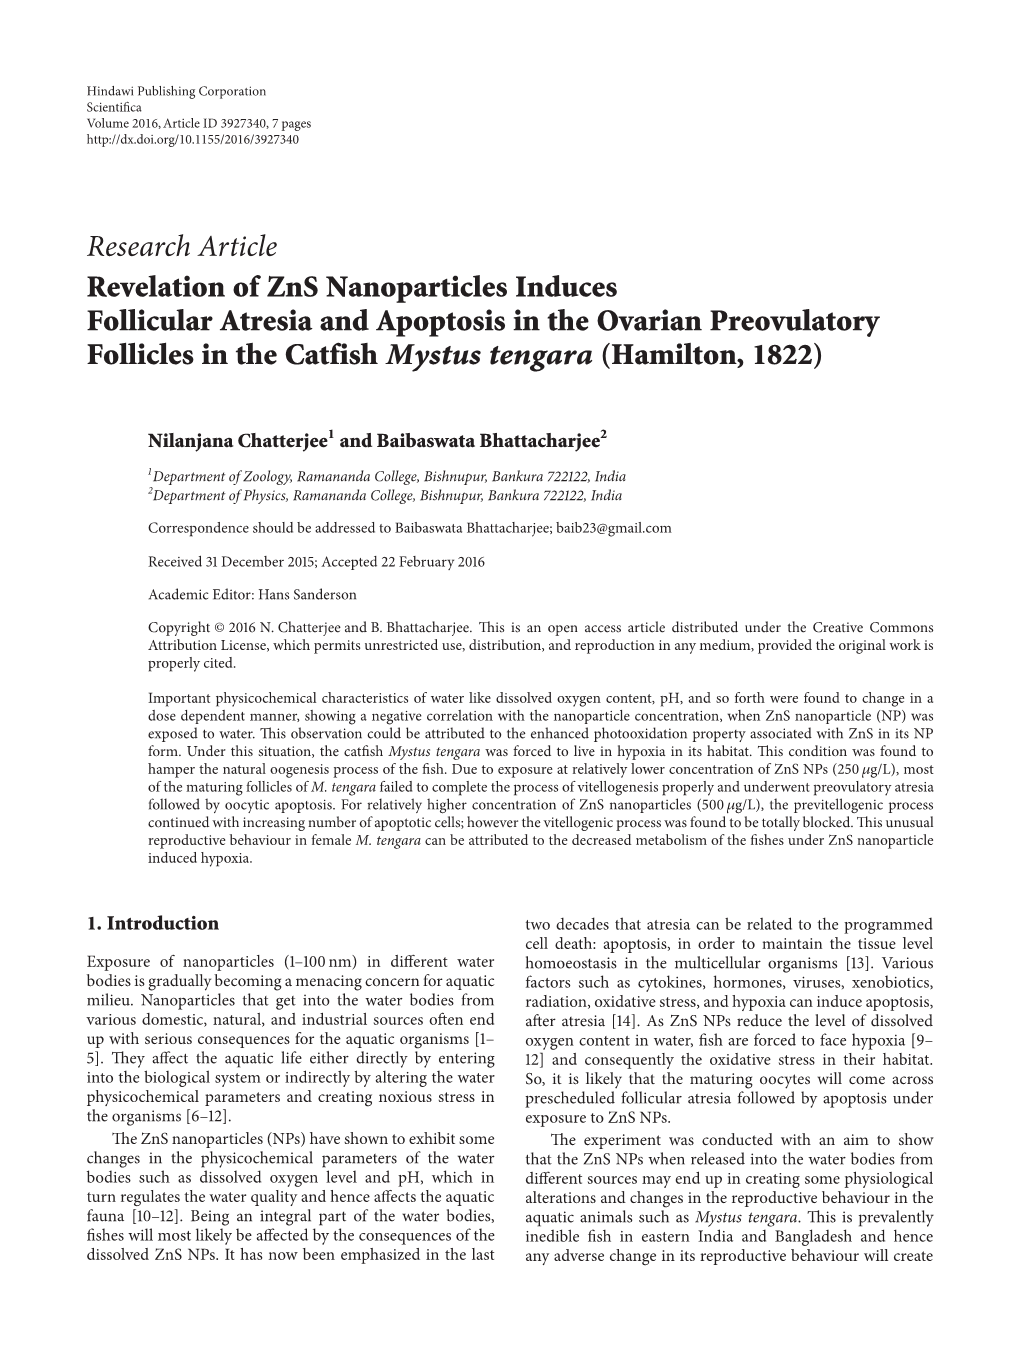 Revelation of Zns Nanoparticles Induces Follicular Atresia and Apoptosis in the Ovarian Preovulatory Follicles in the Catfish Mystus Tengara (Hamilton, 1822)